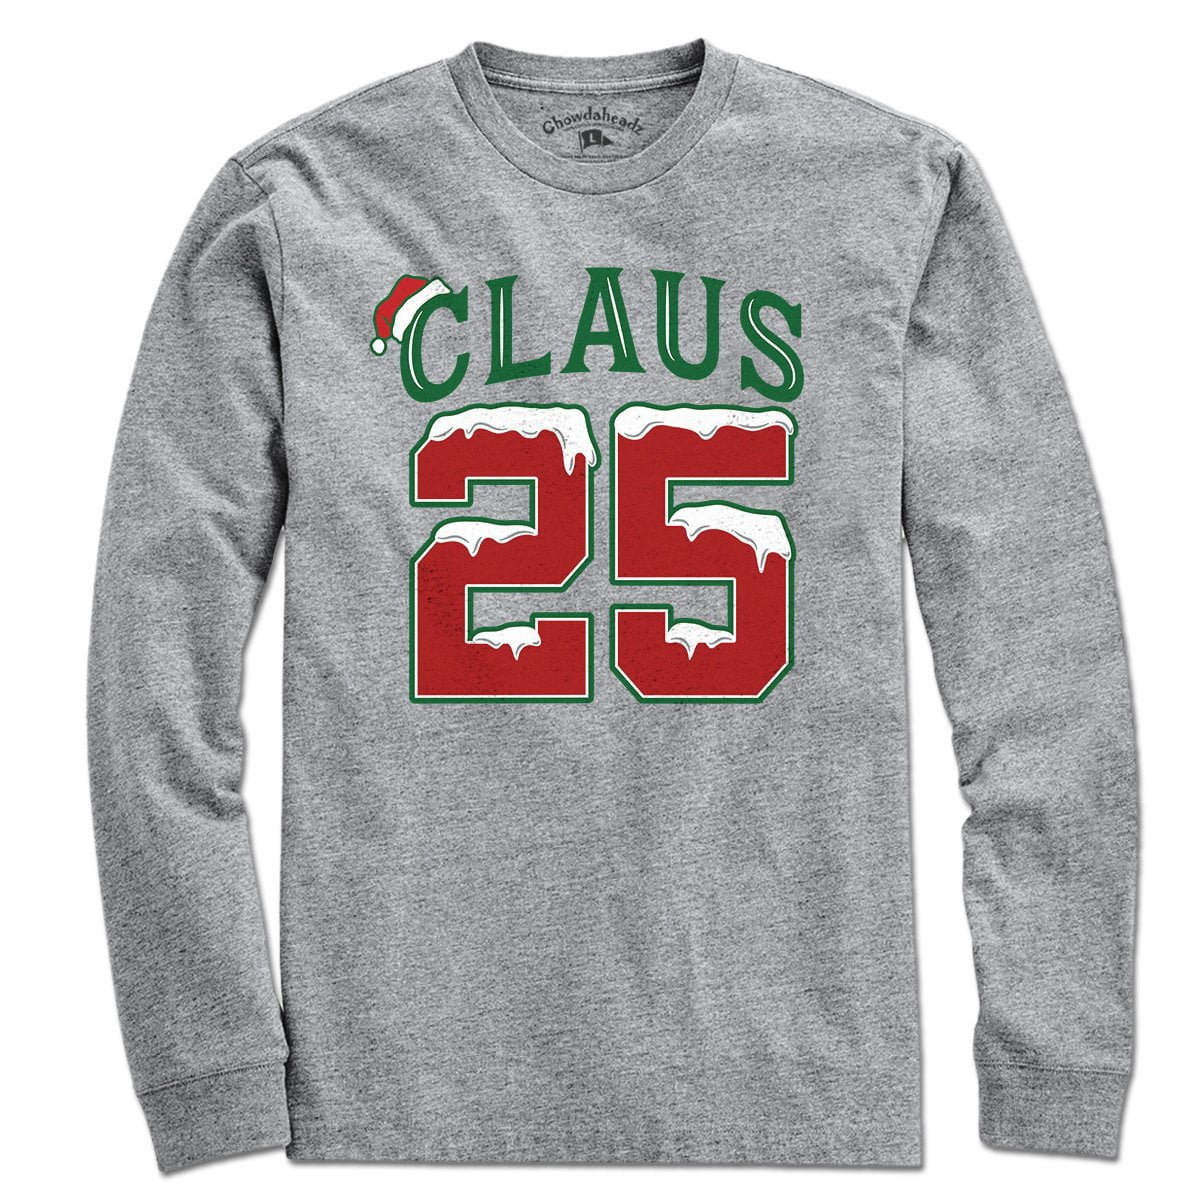 Claus 25 Alter Ego T-shirt - Chowdaheadz